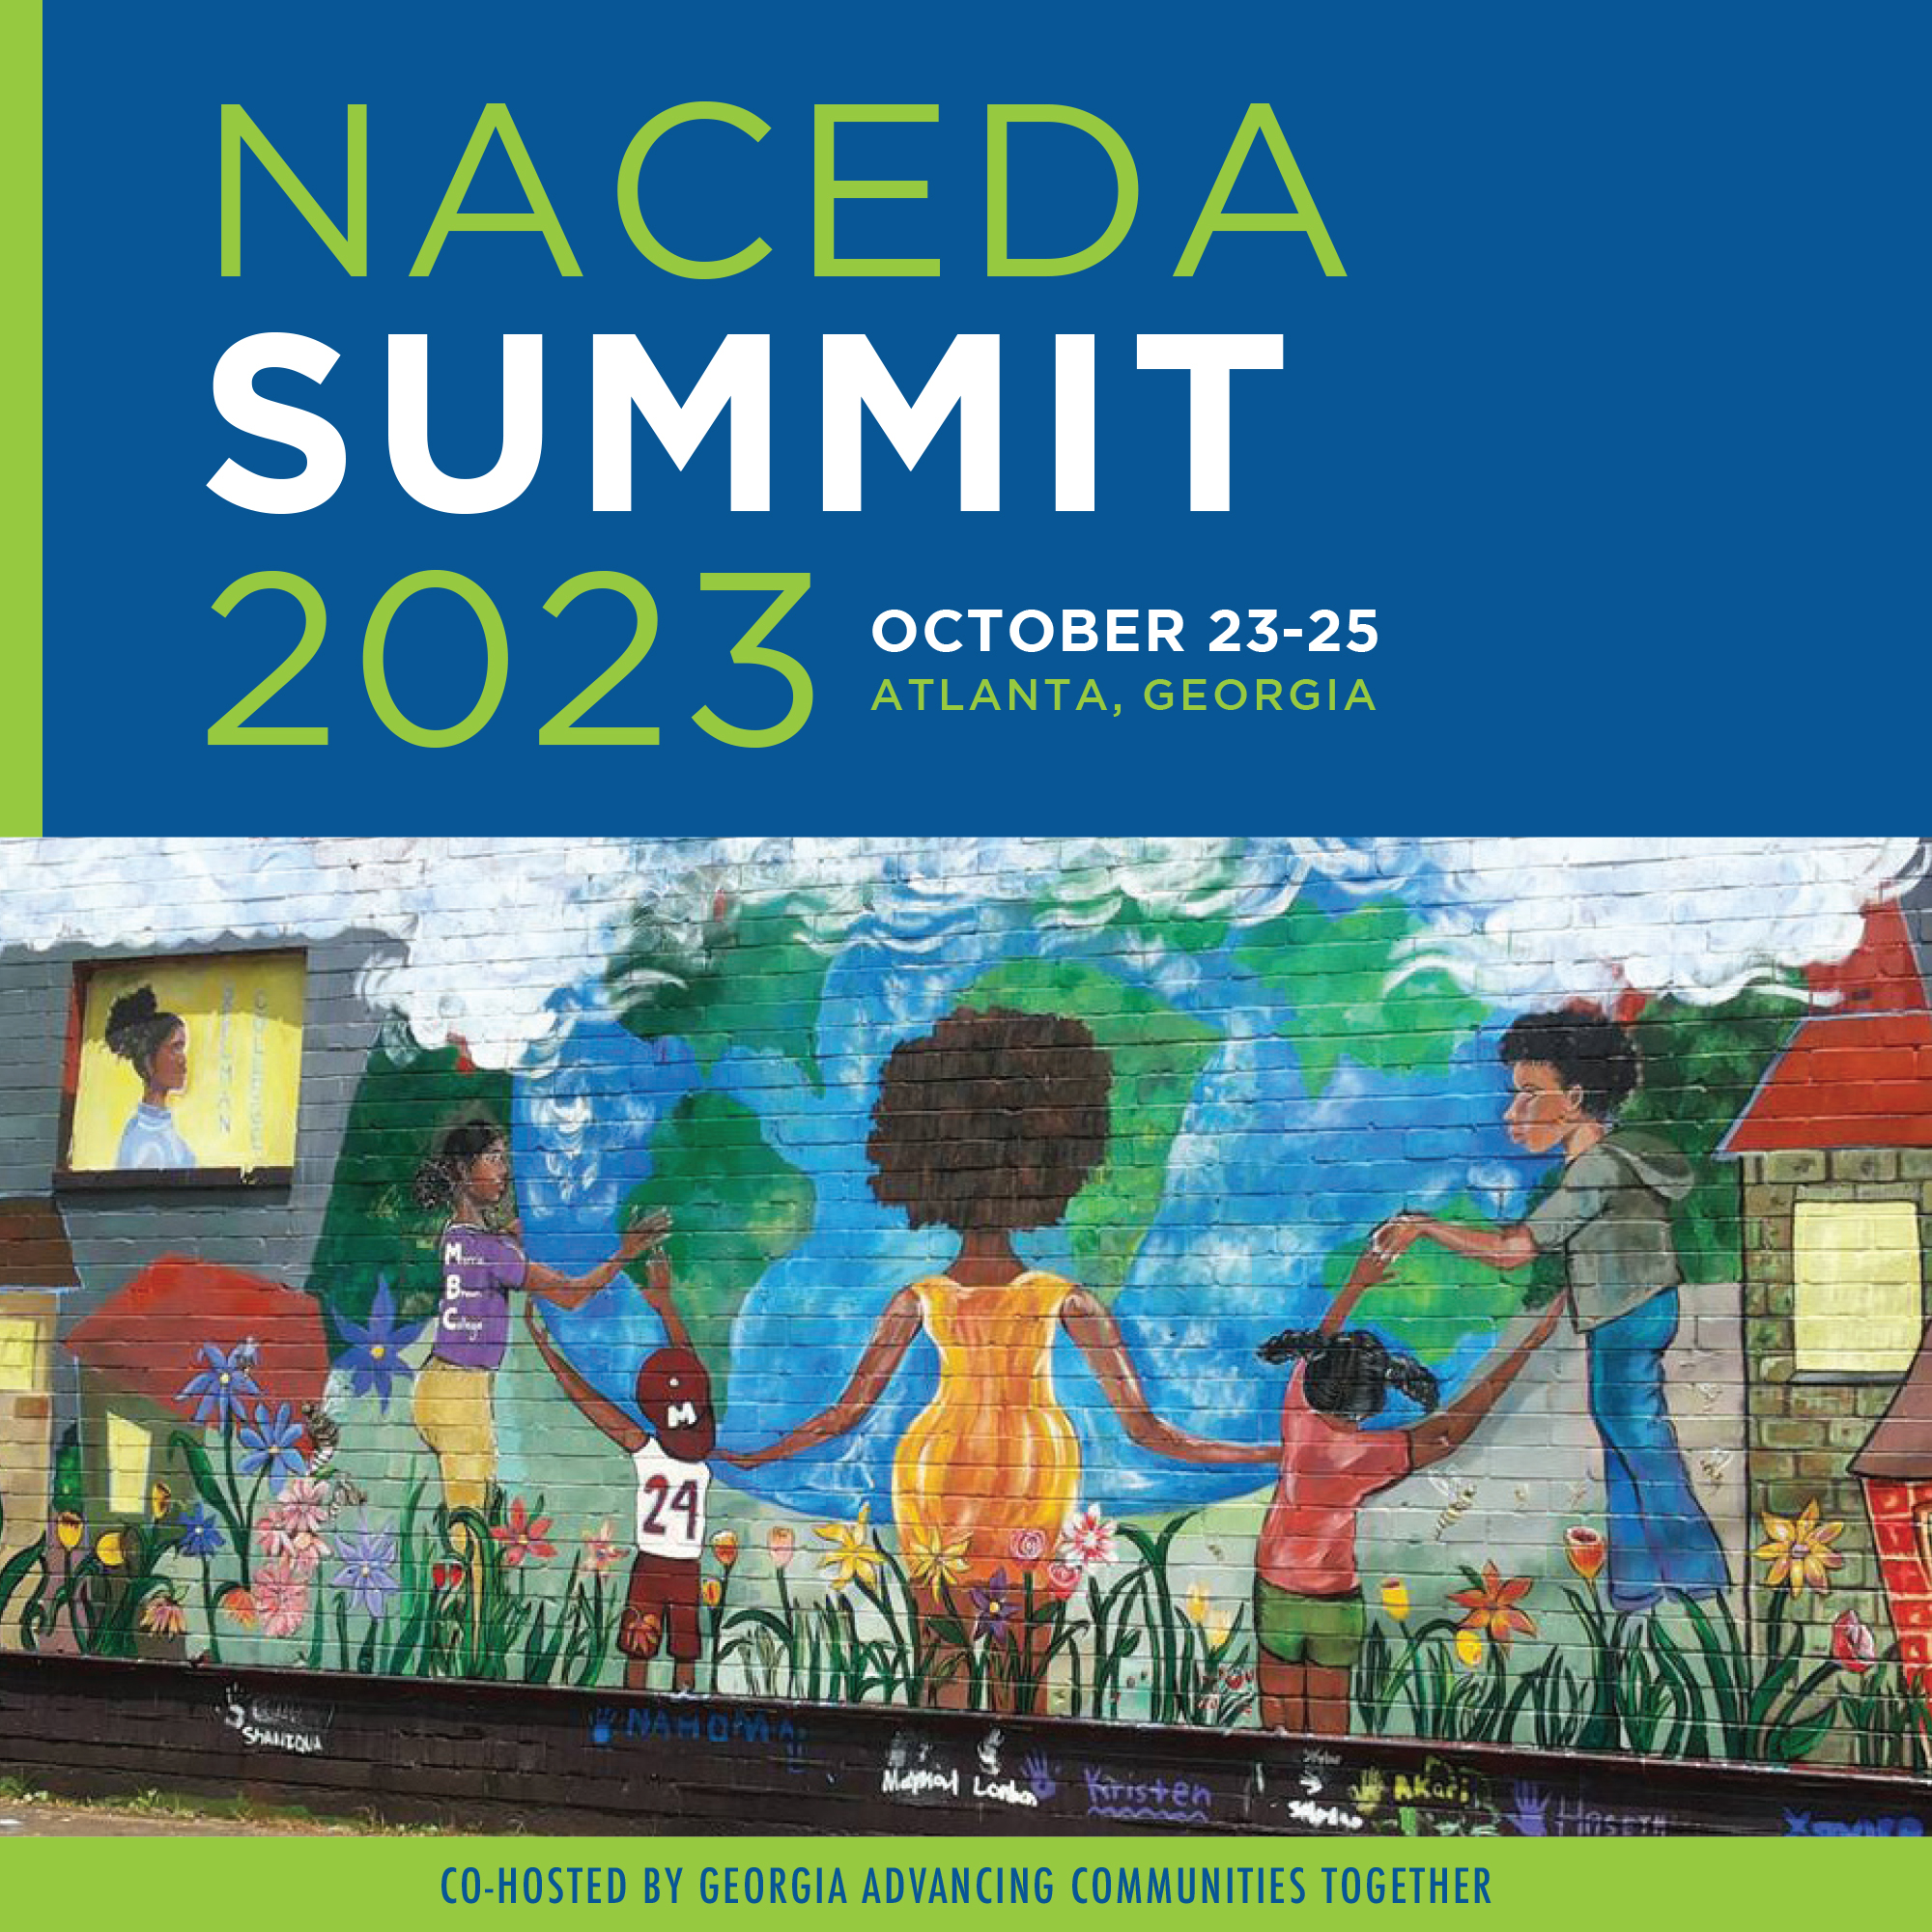 NACEDA Summit 2023